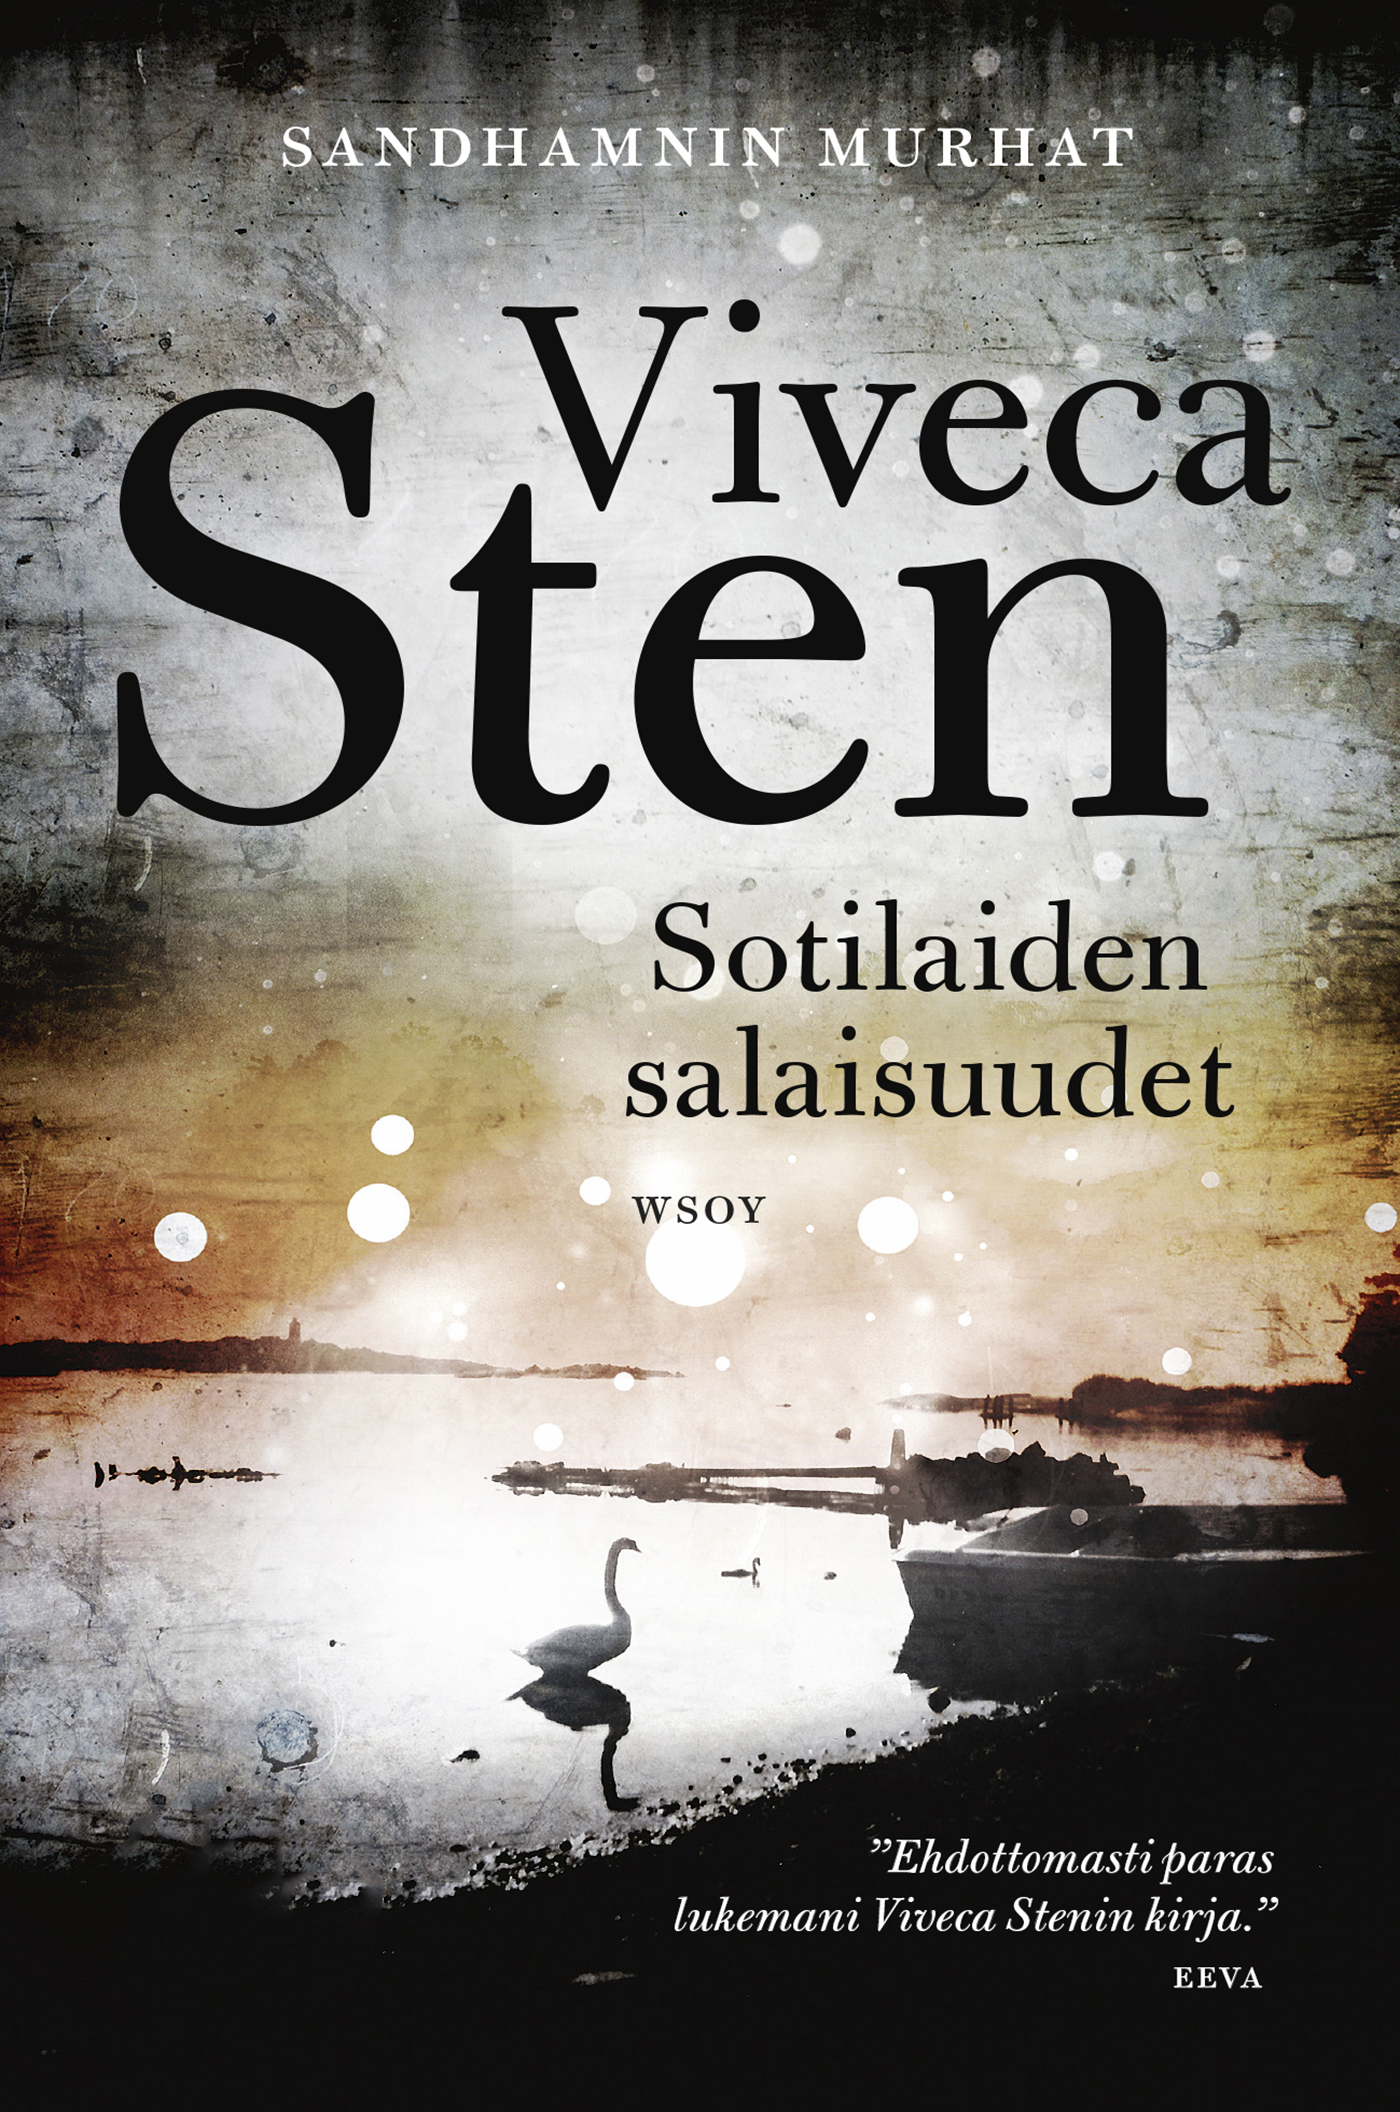 Sten, Viveca - Sotilaiden salaisuudet, ebook